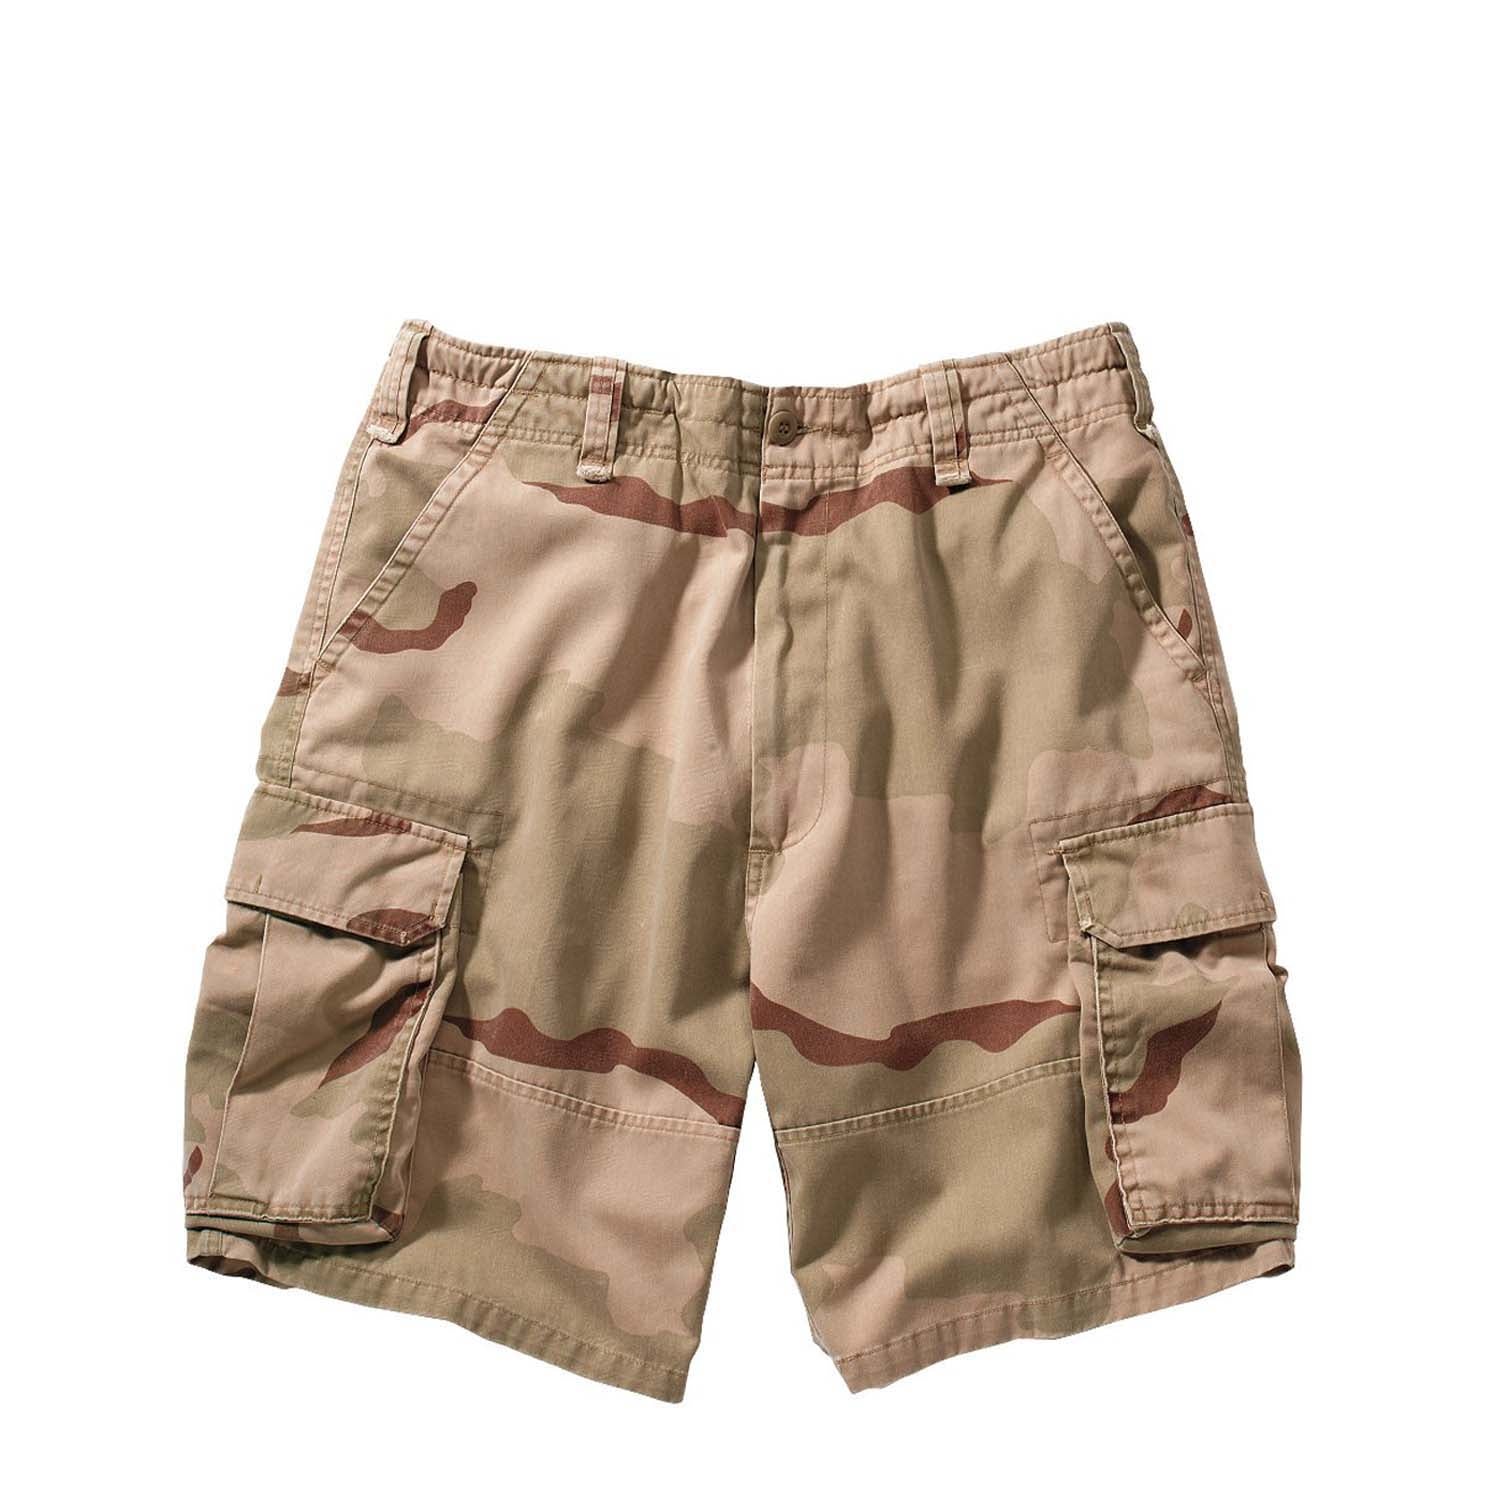 Rothco Vintage Paratrooper Cargo Shorts Tri-Color Desert Camo (2150)